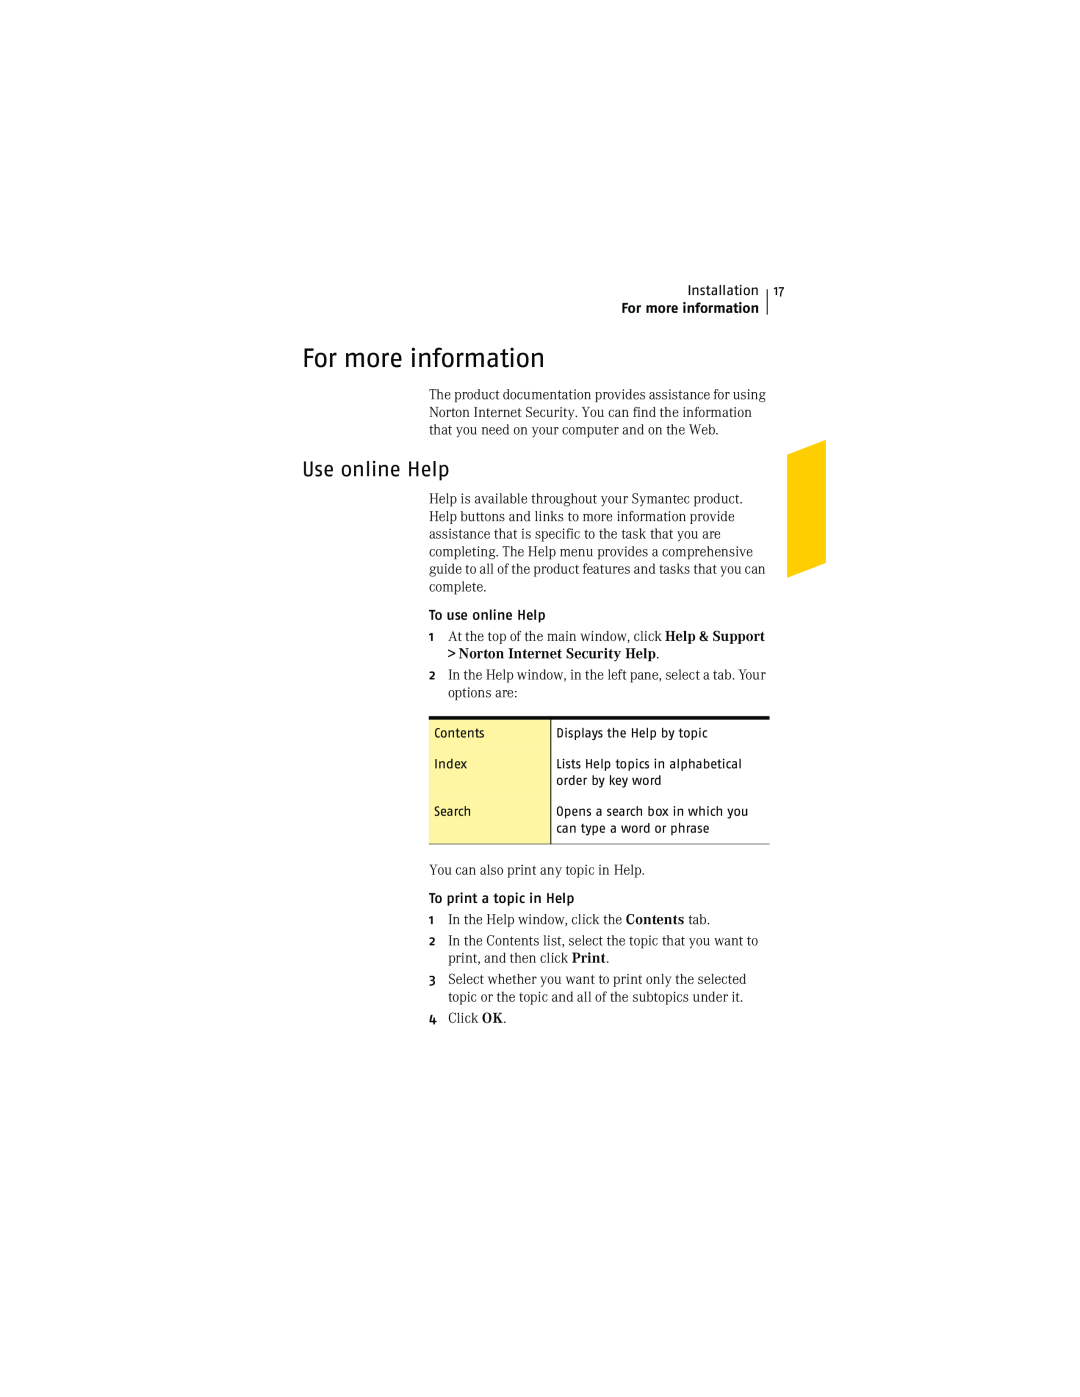 Symantec NIS2005 manual For more information, Use online Help 